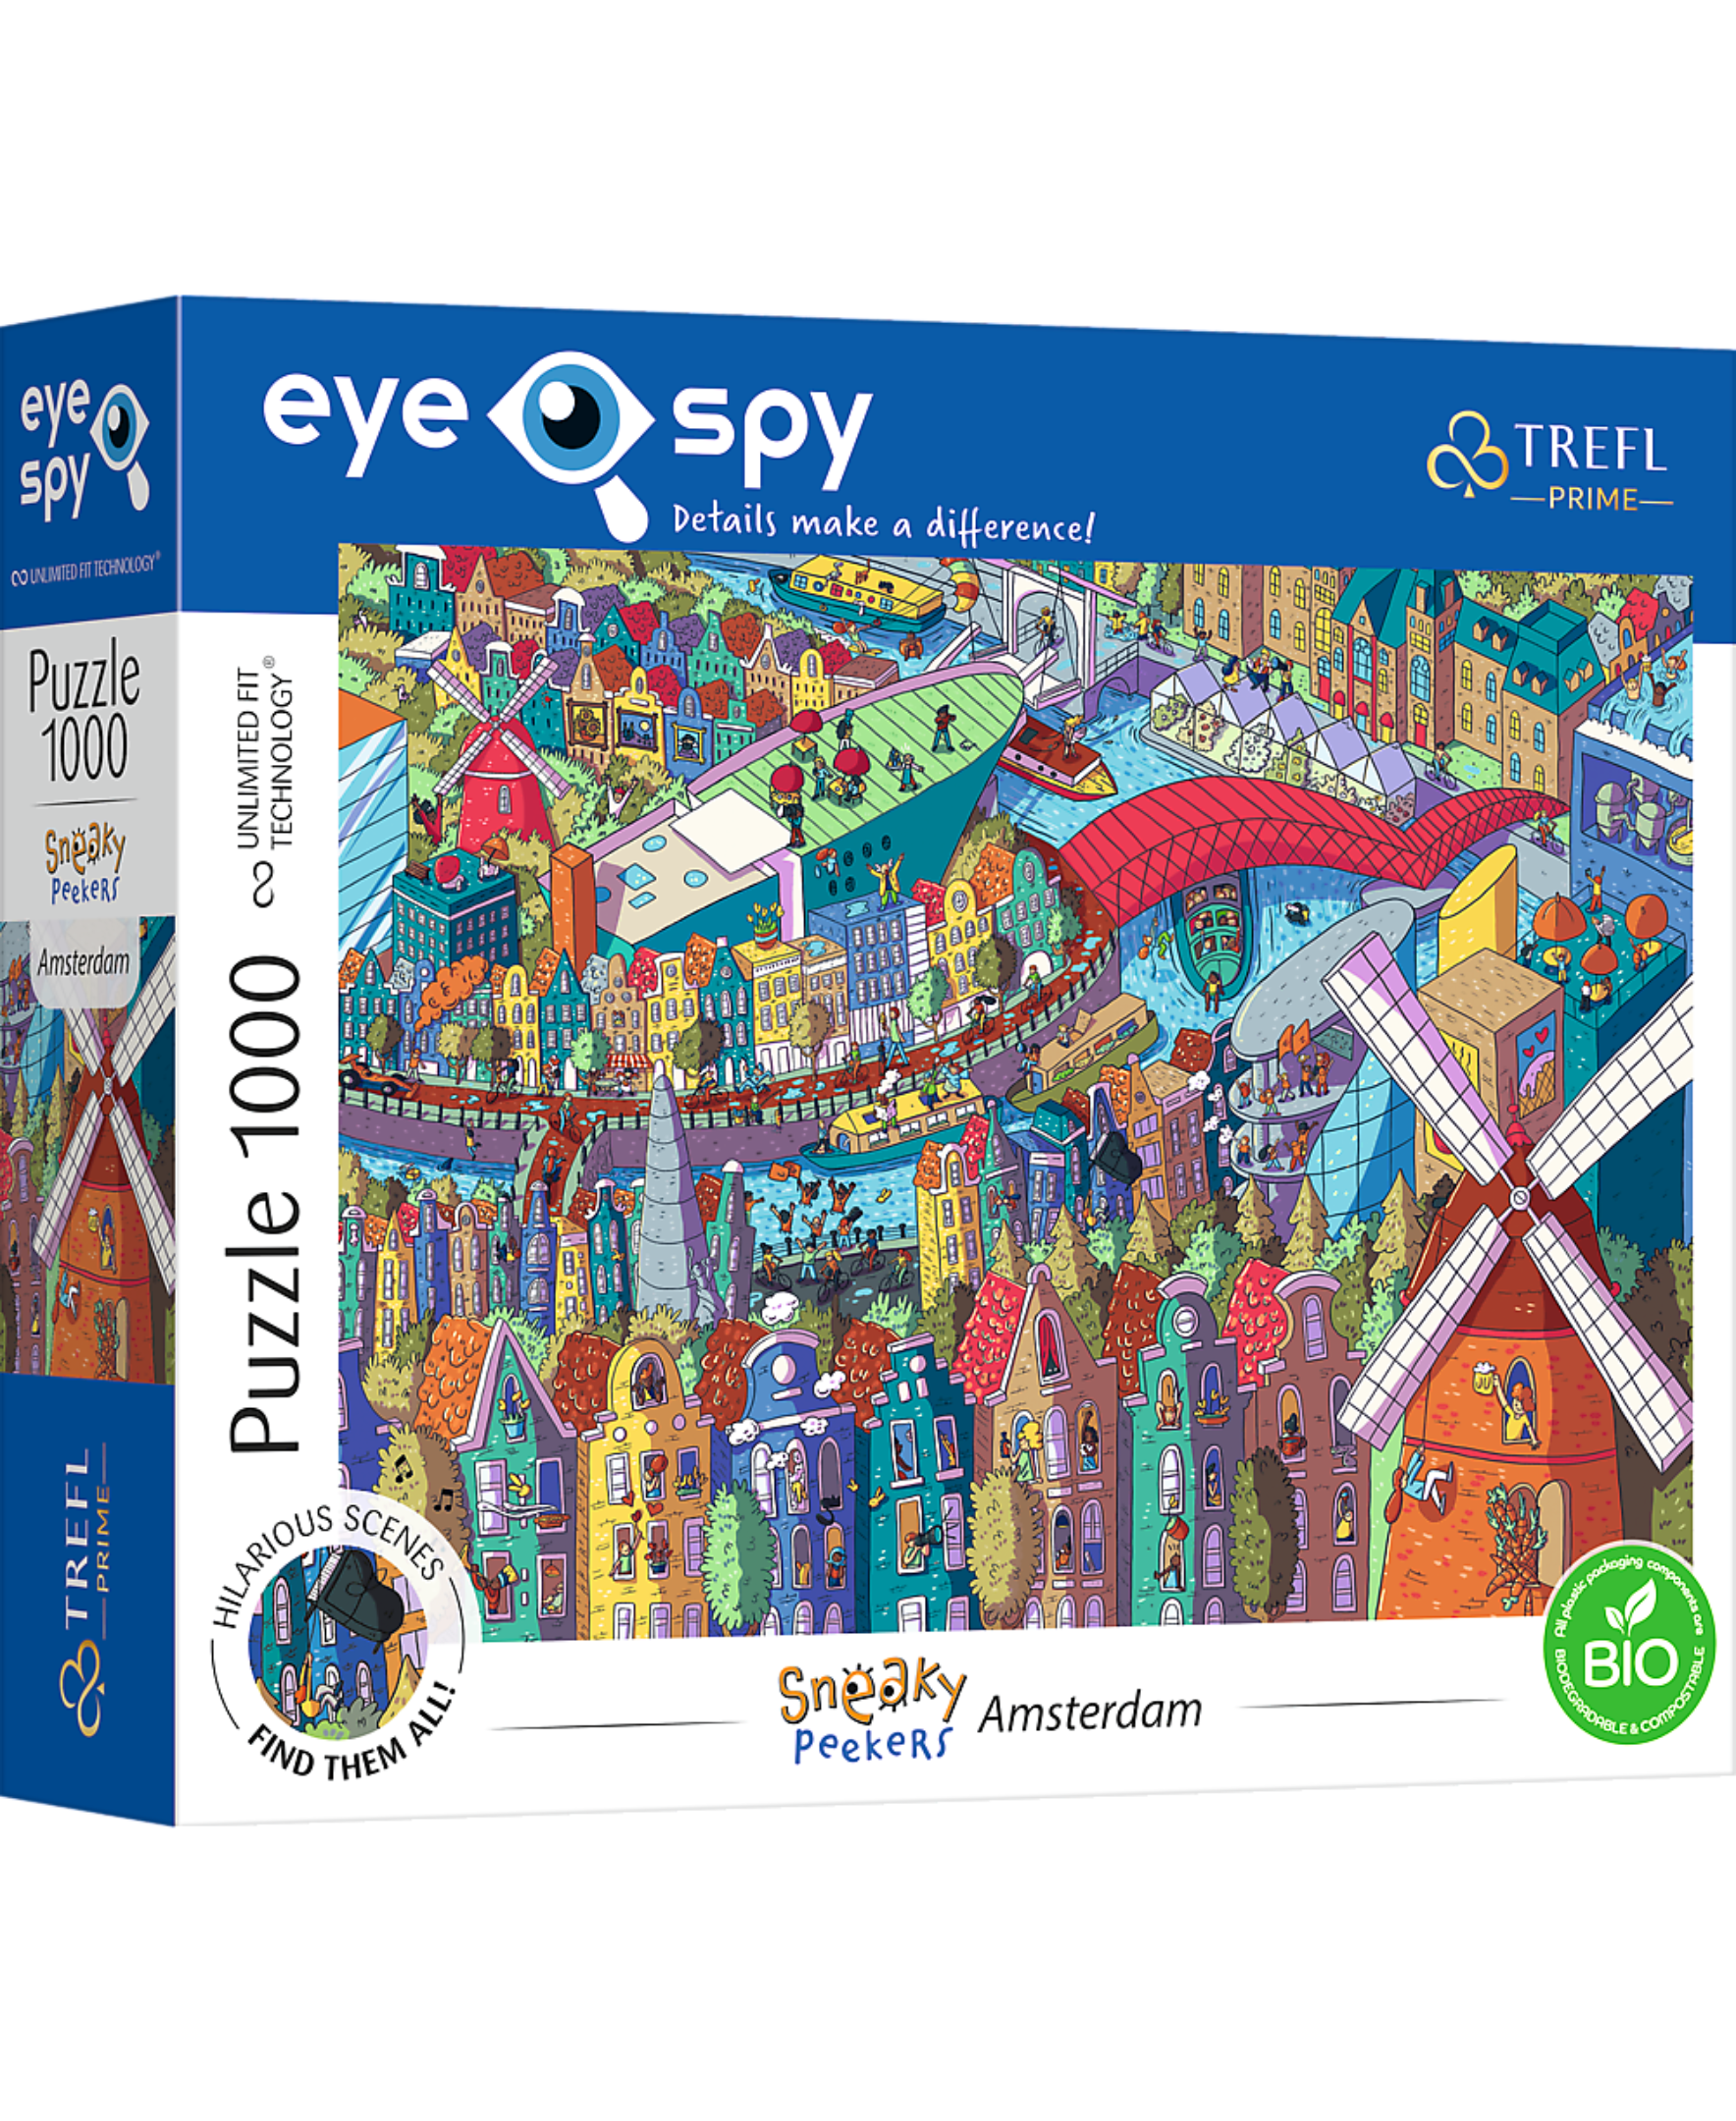 Trefl Prime Eye Spy 1000 Piece Puzzle - Sneaky Peakers: Amsterdam